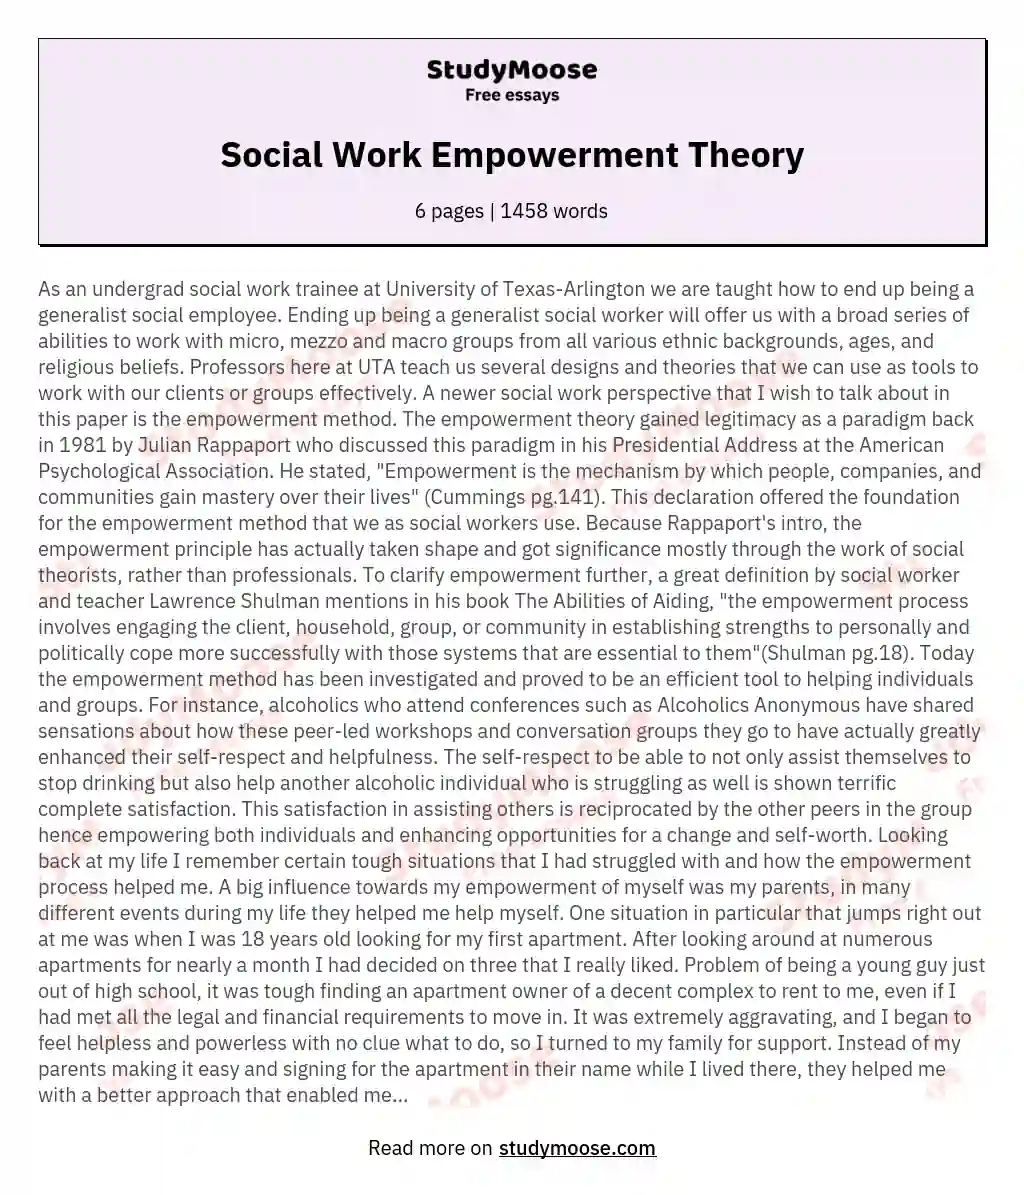 Social Work Empowerment Theory essay